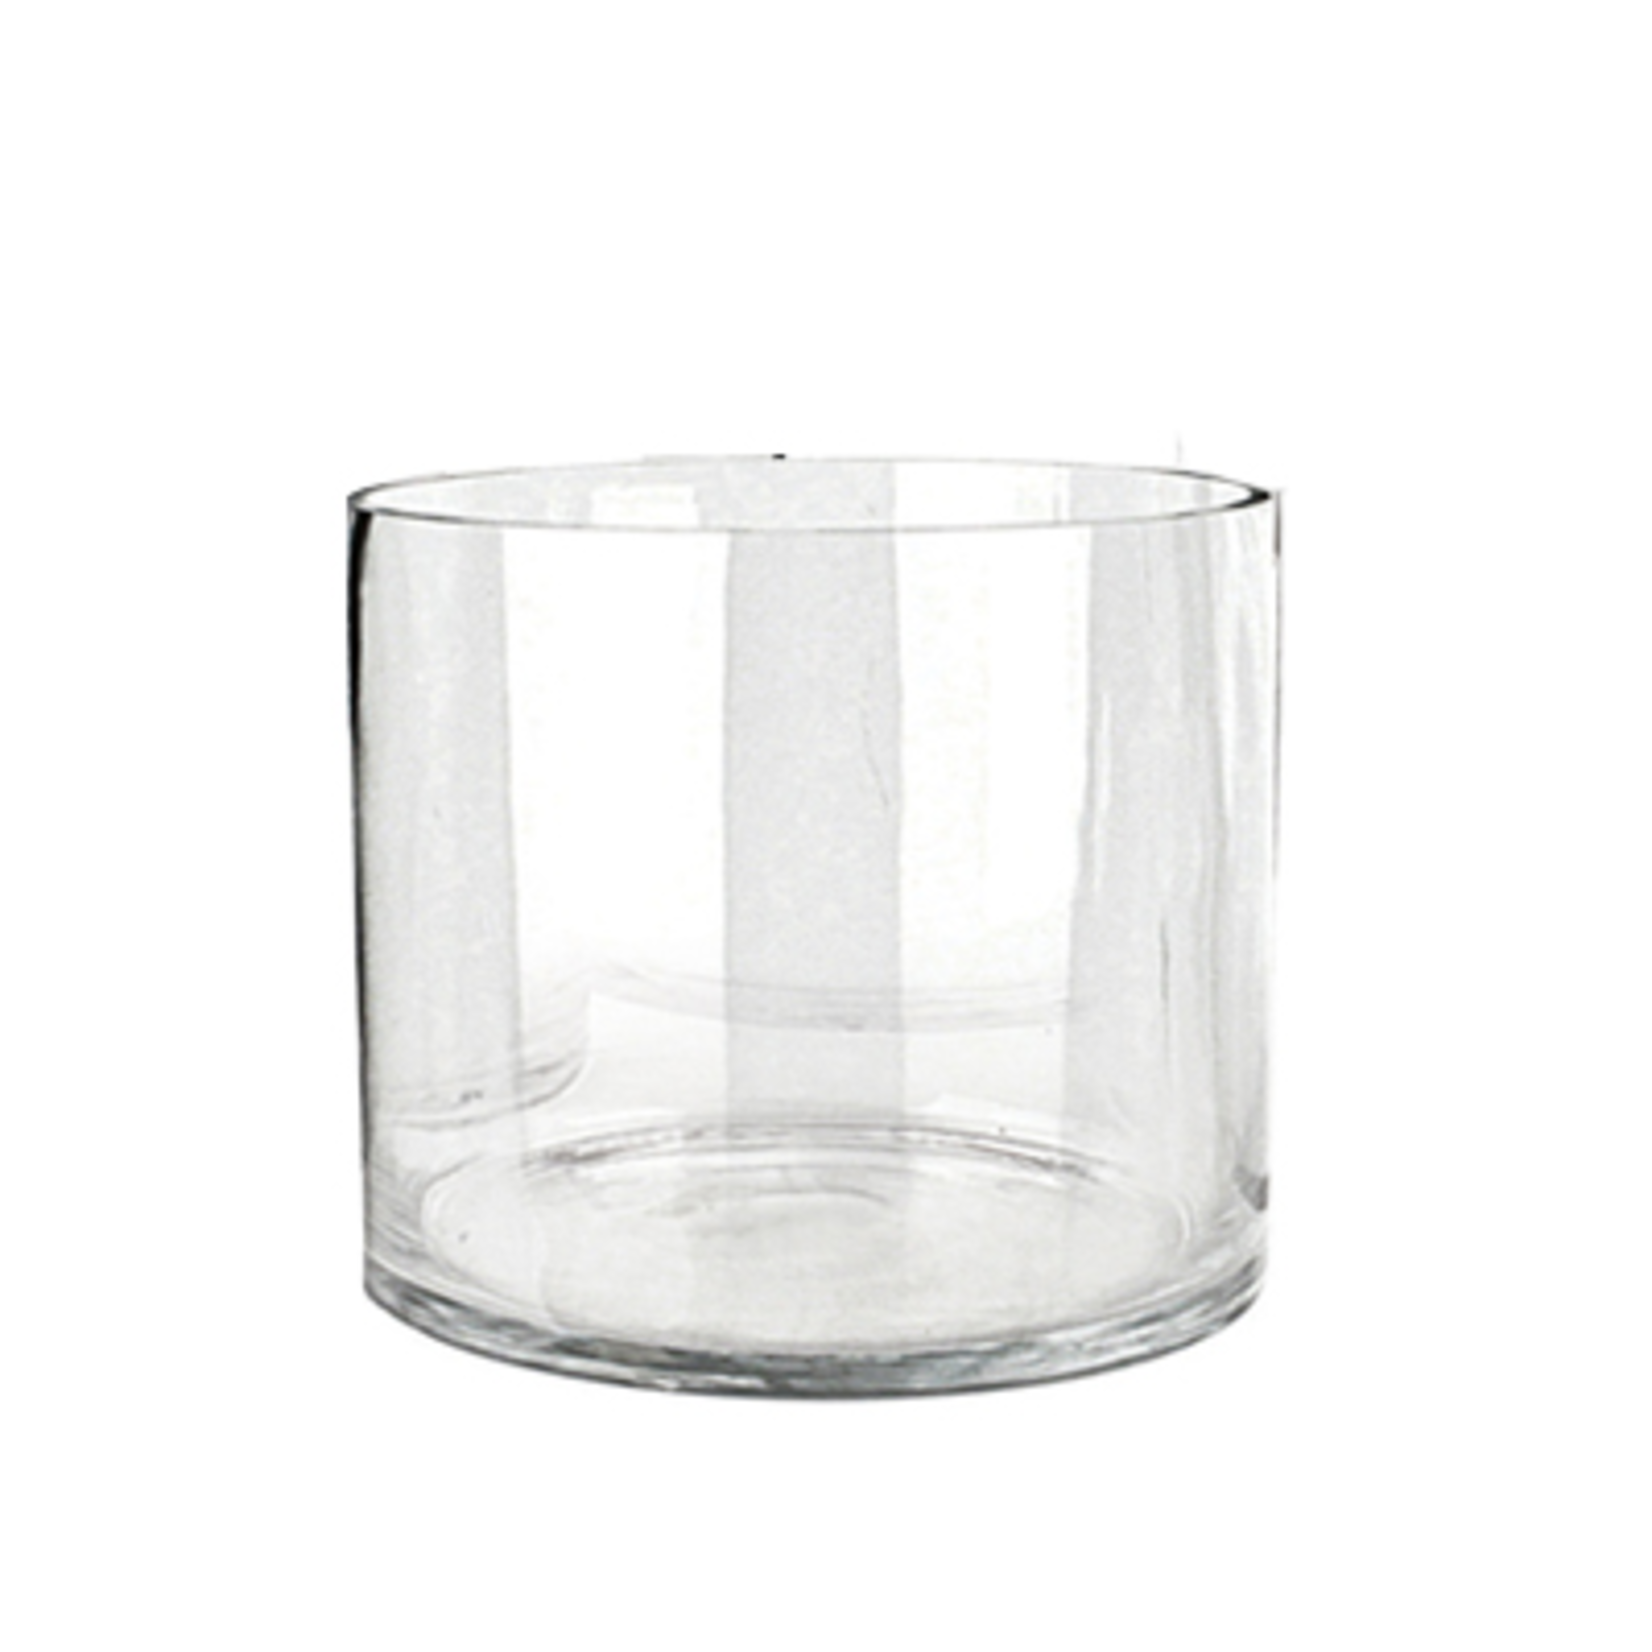 10"H X 12"D CLEAR GLASS CYLINDER VASE